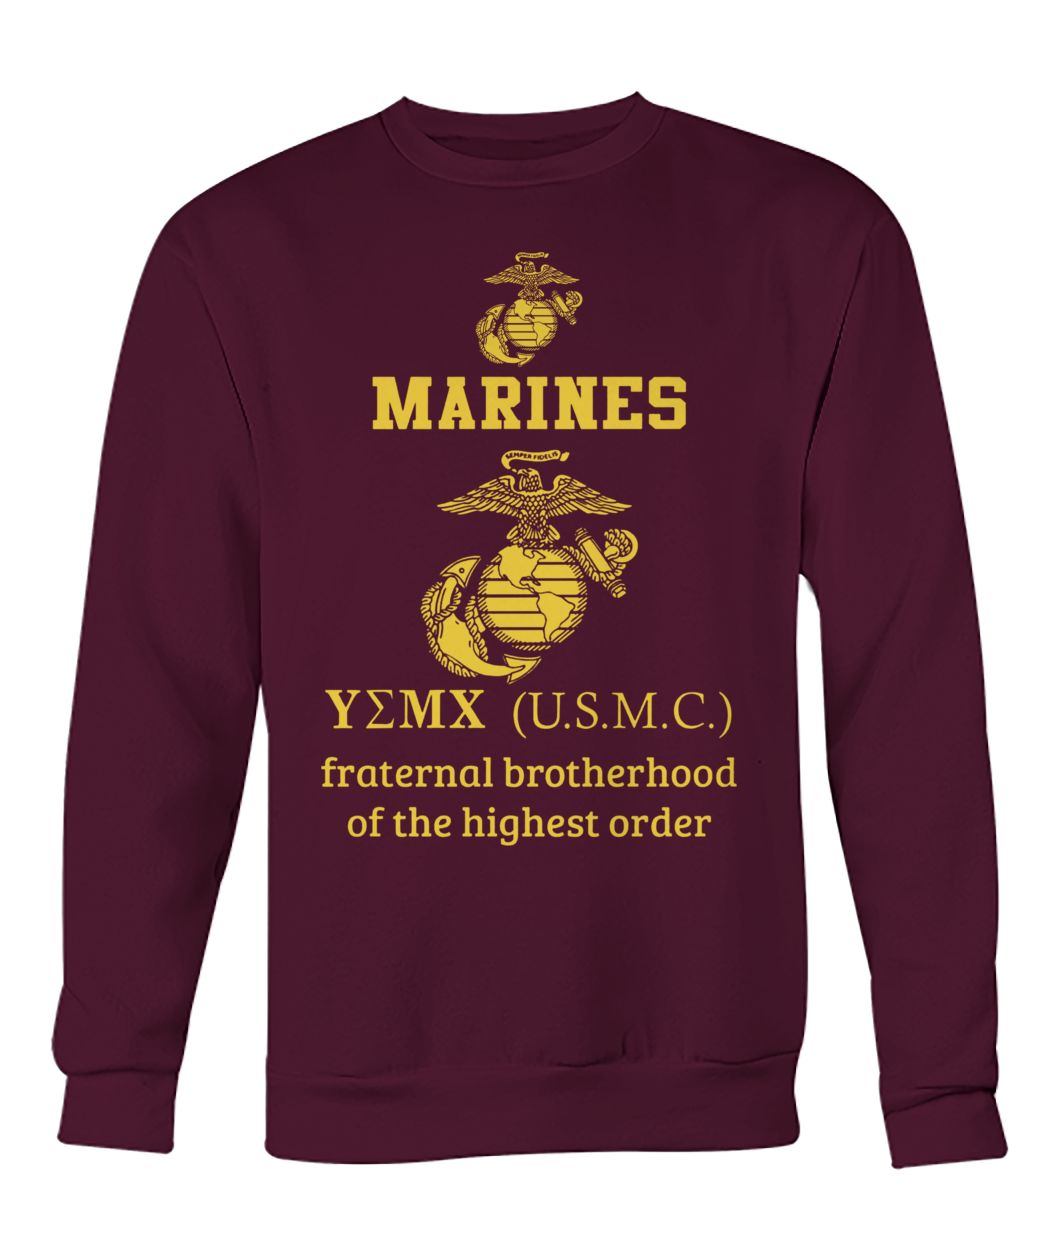 Marine corps fraternal brotherhood of the highest order crew neck sweatshirt